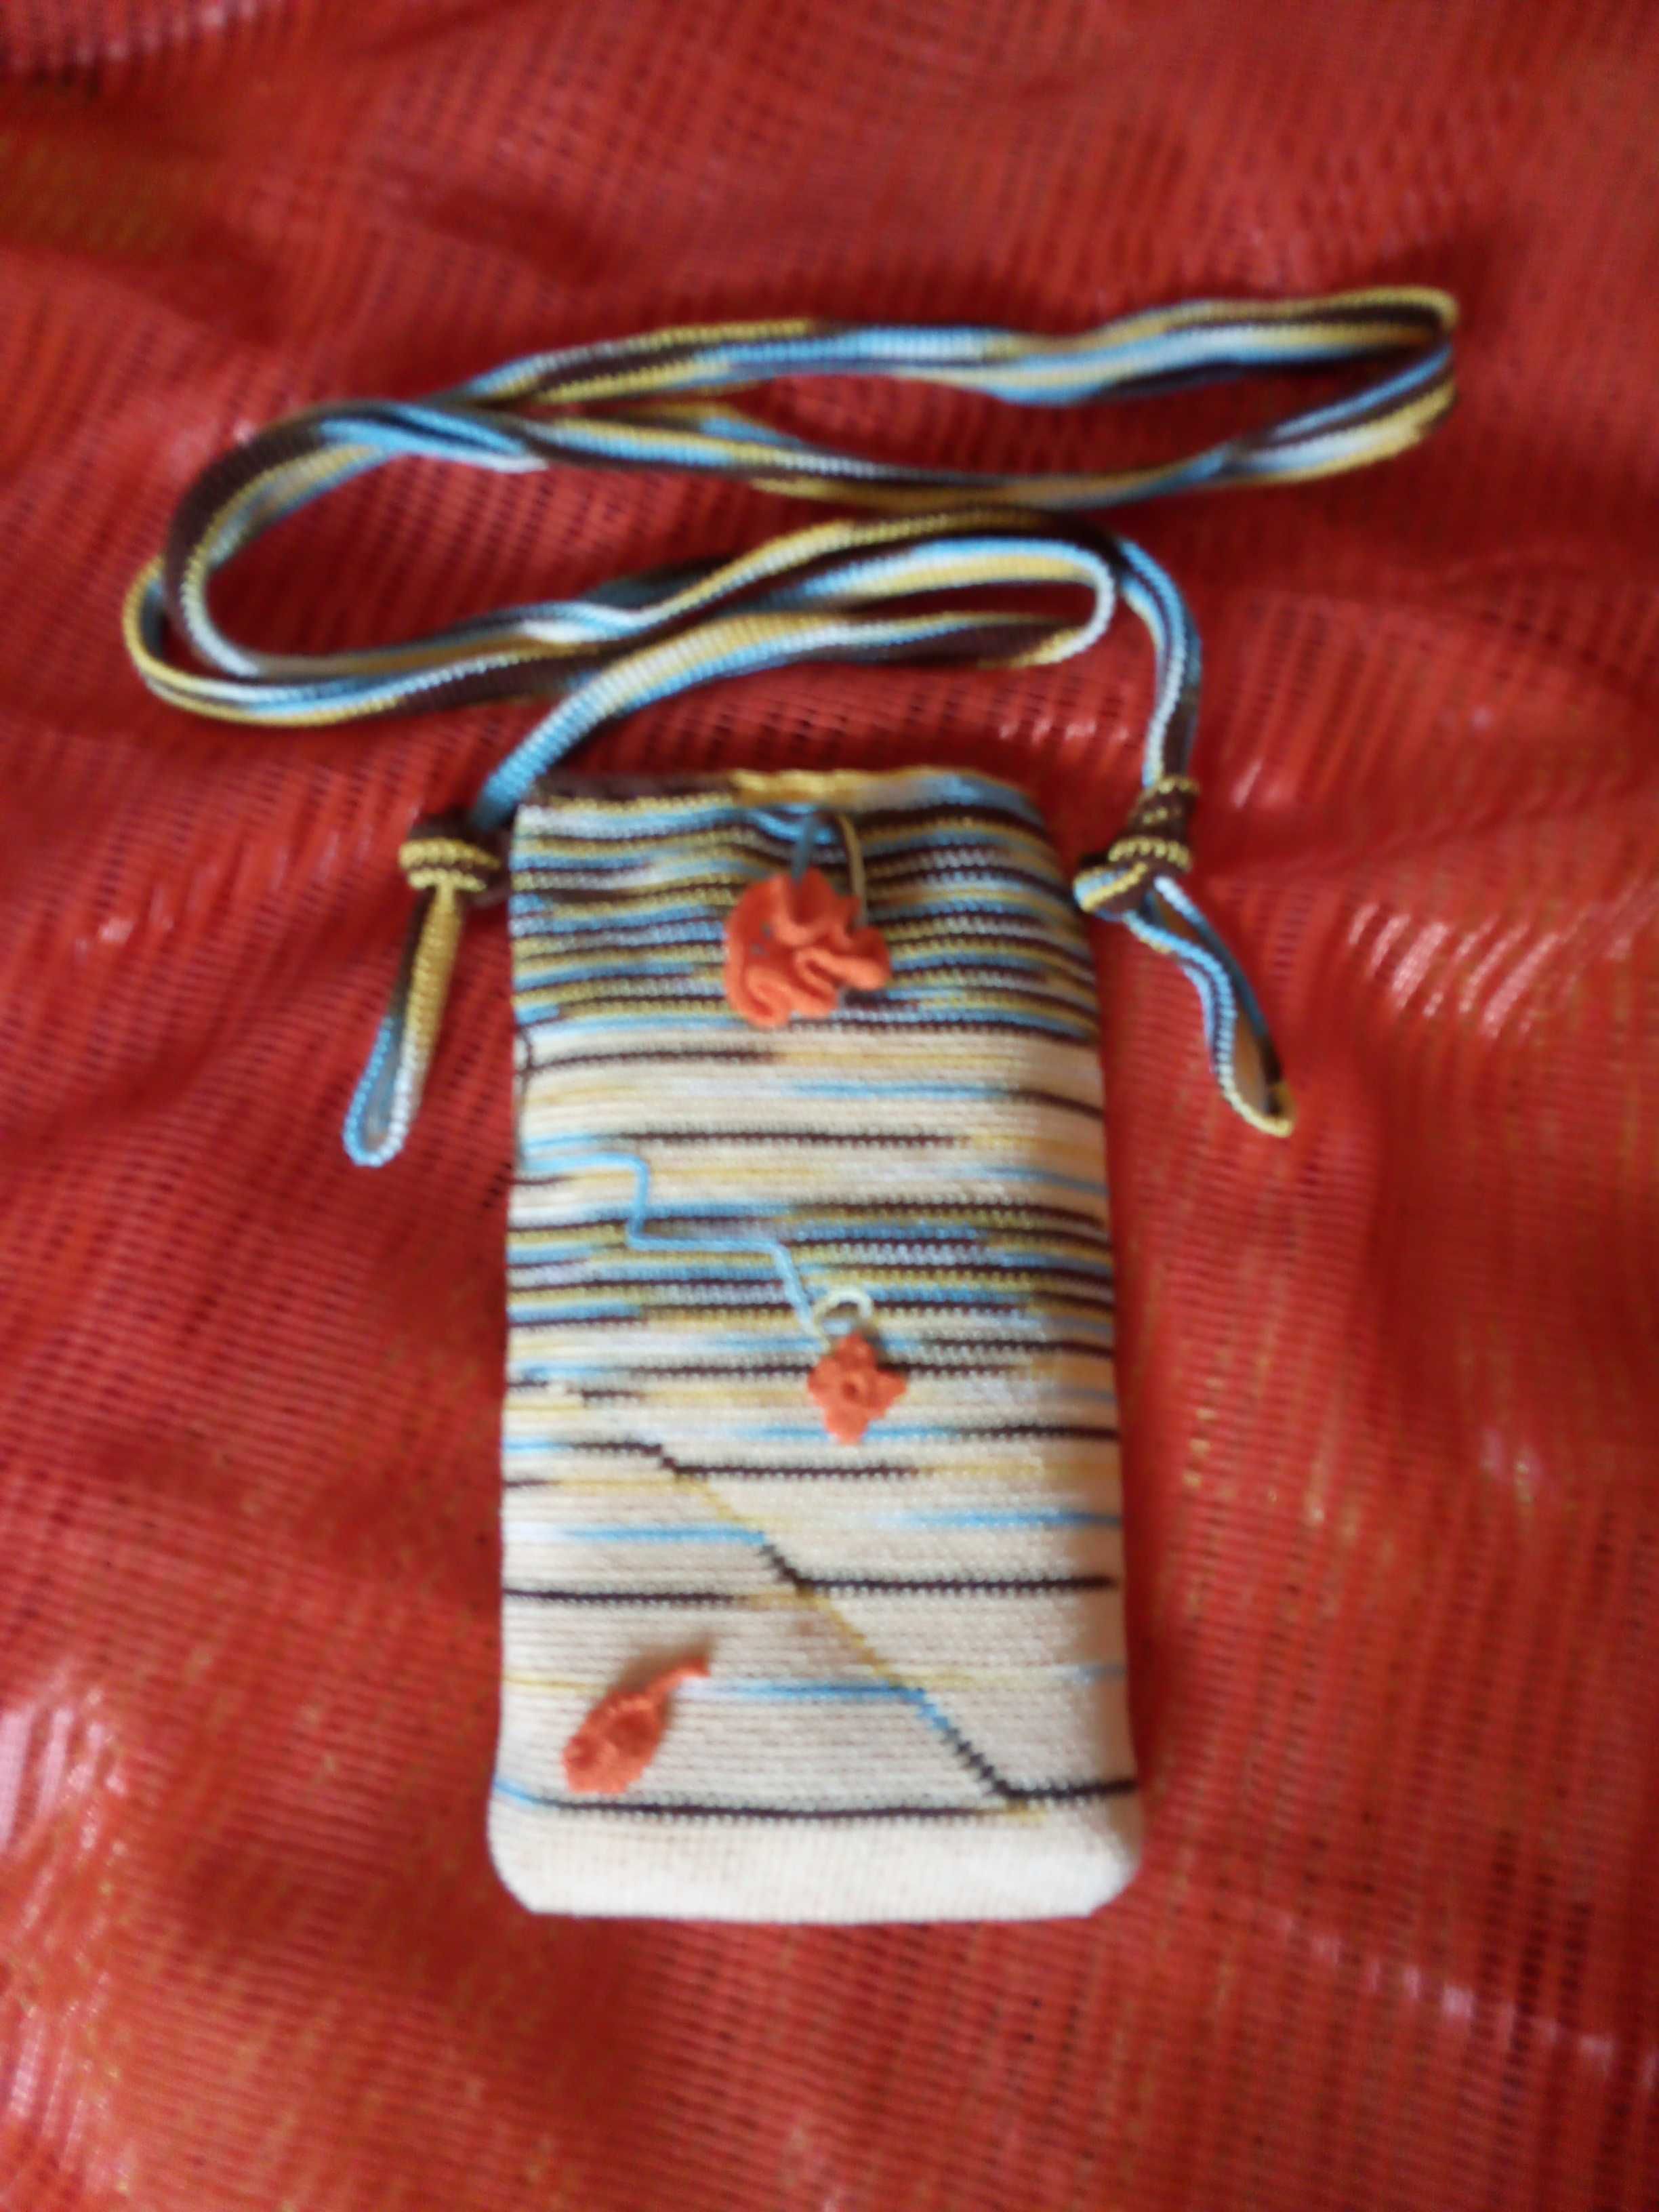 Bolsa para telemóvel (smartphone), em crochet